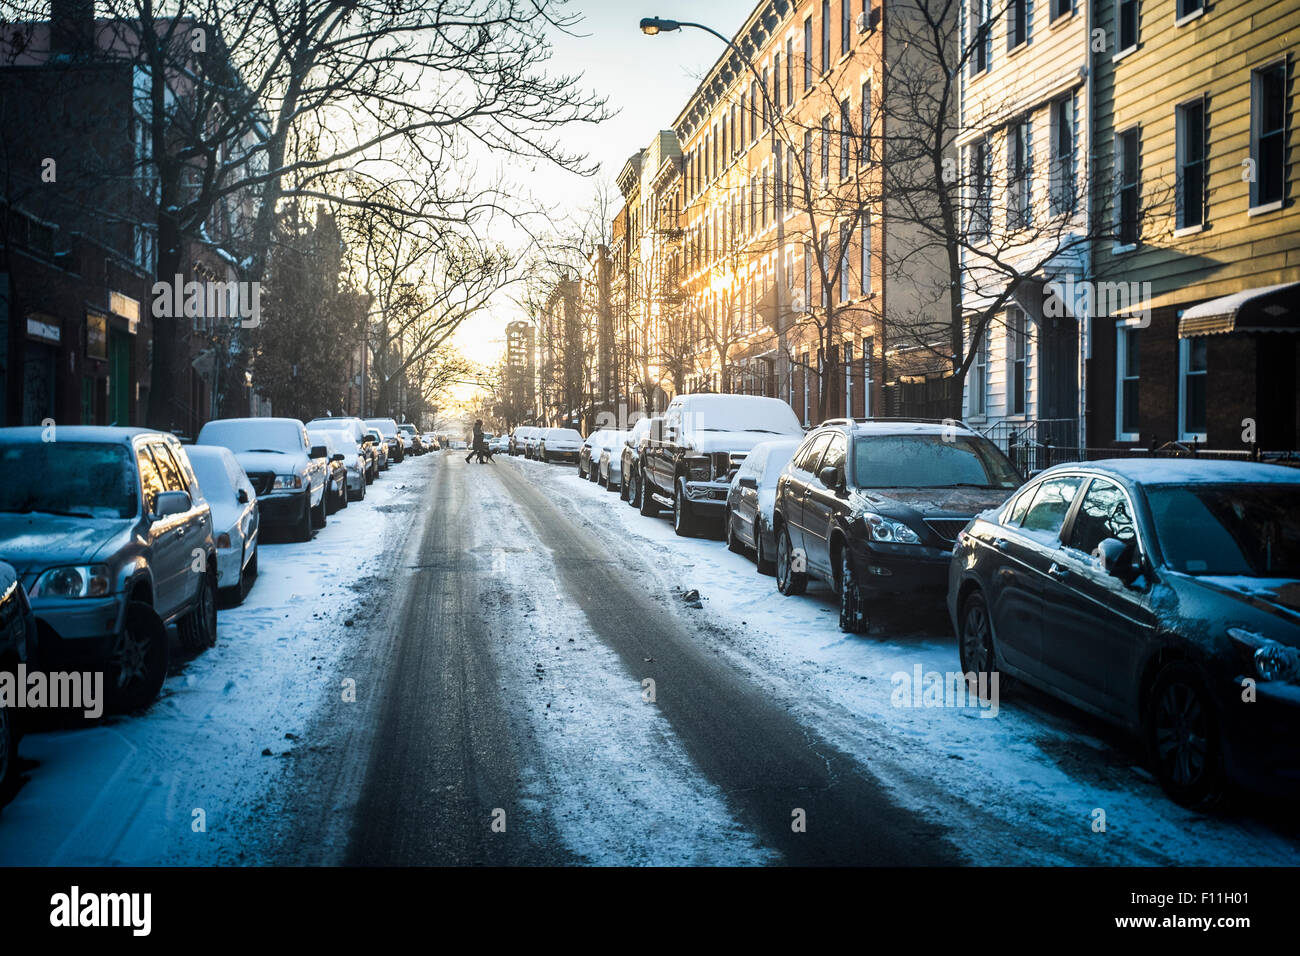 Tire tracks in snow on city street, New York, New York, United States Stock Photo